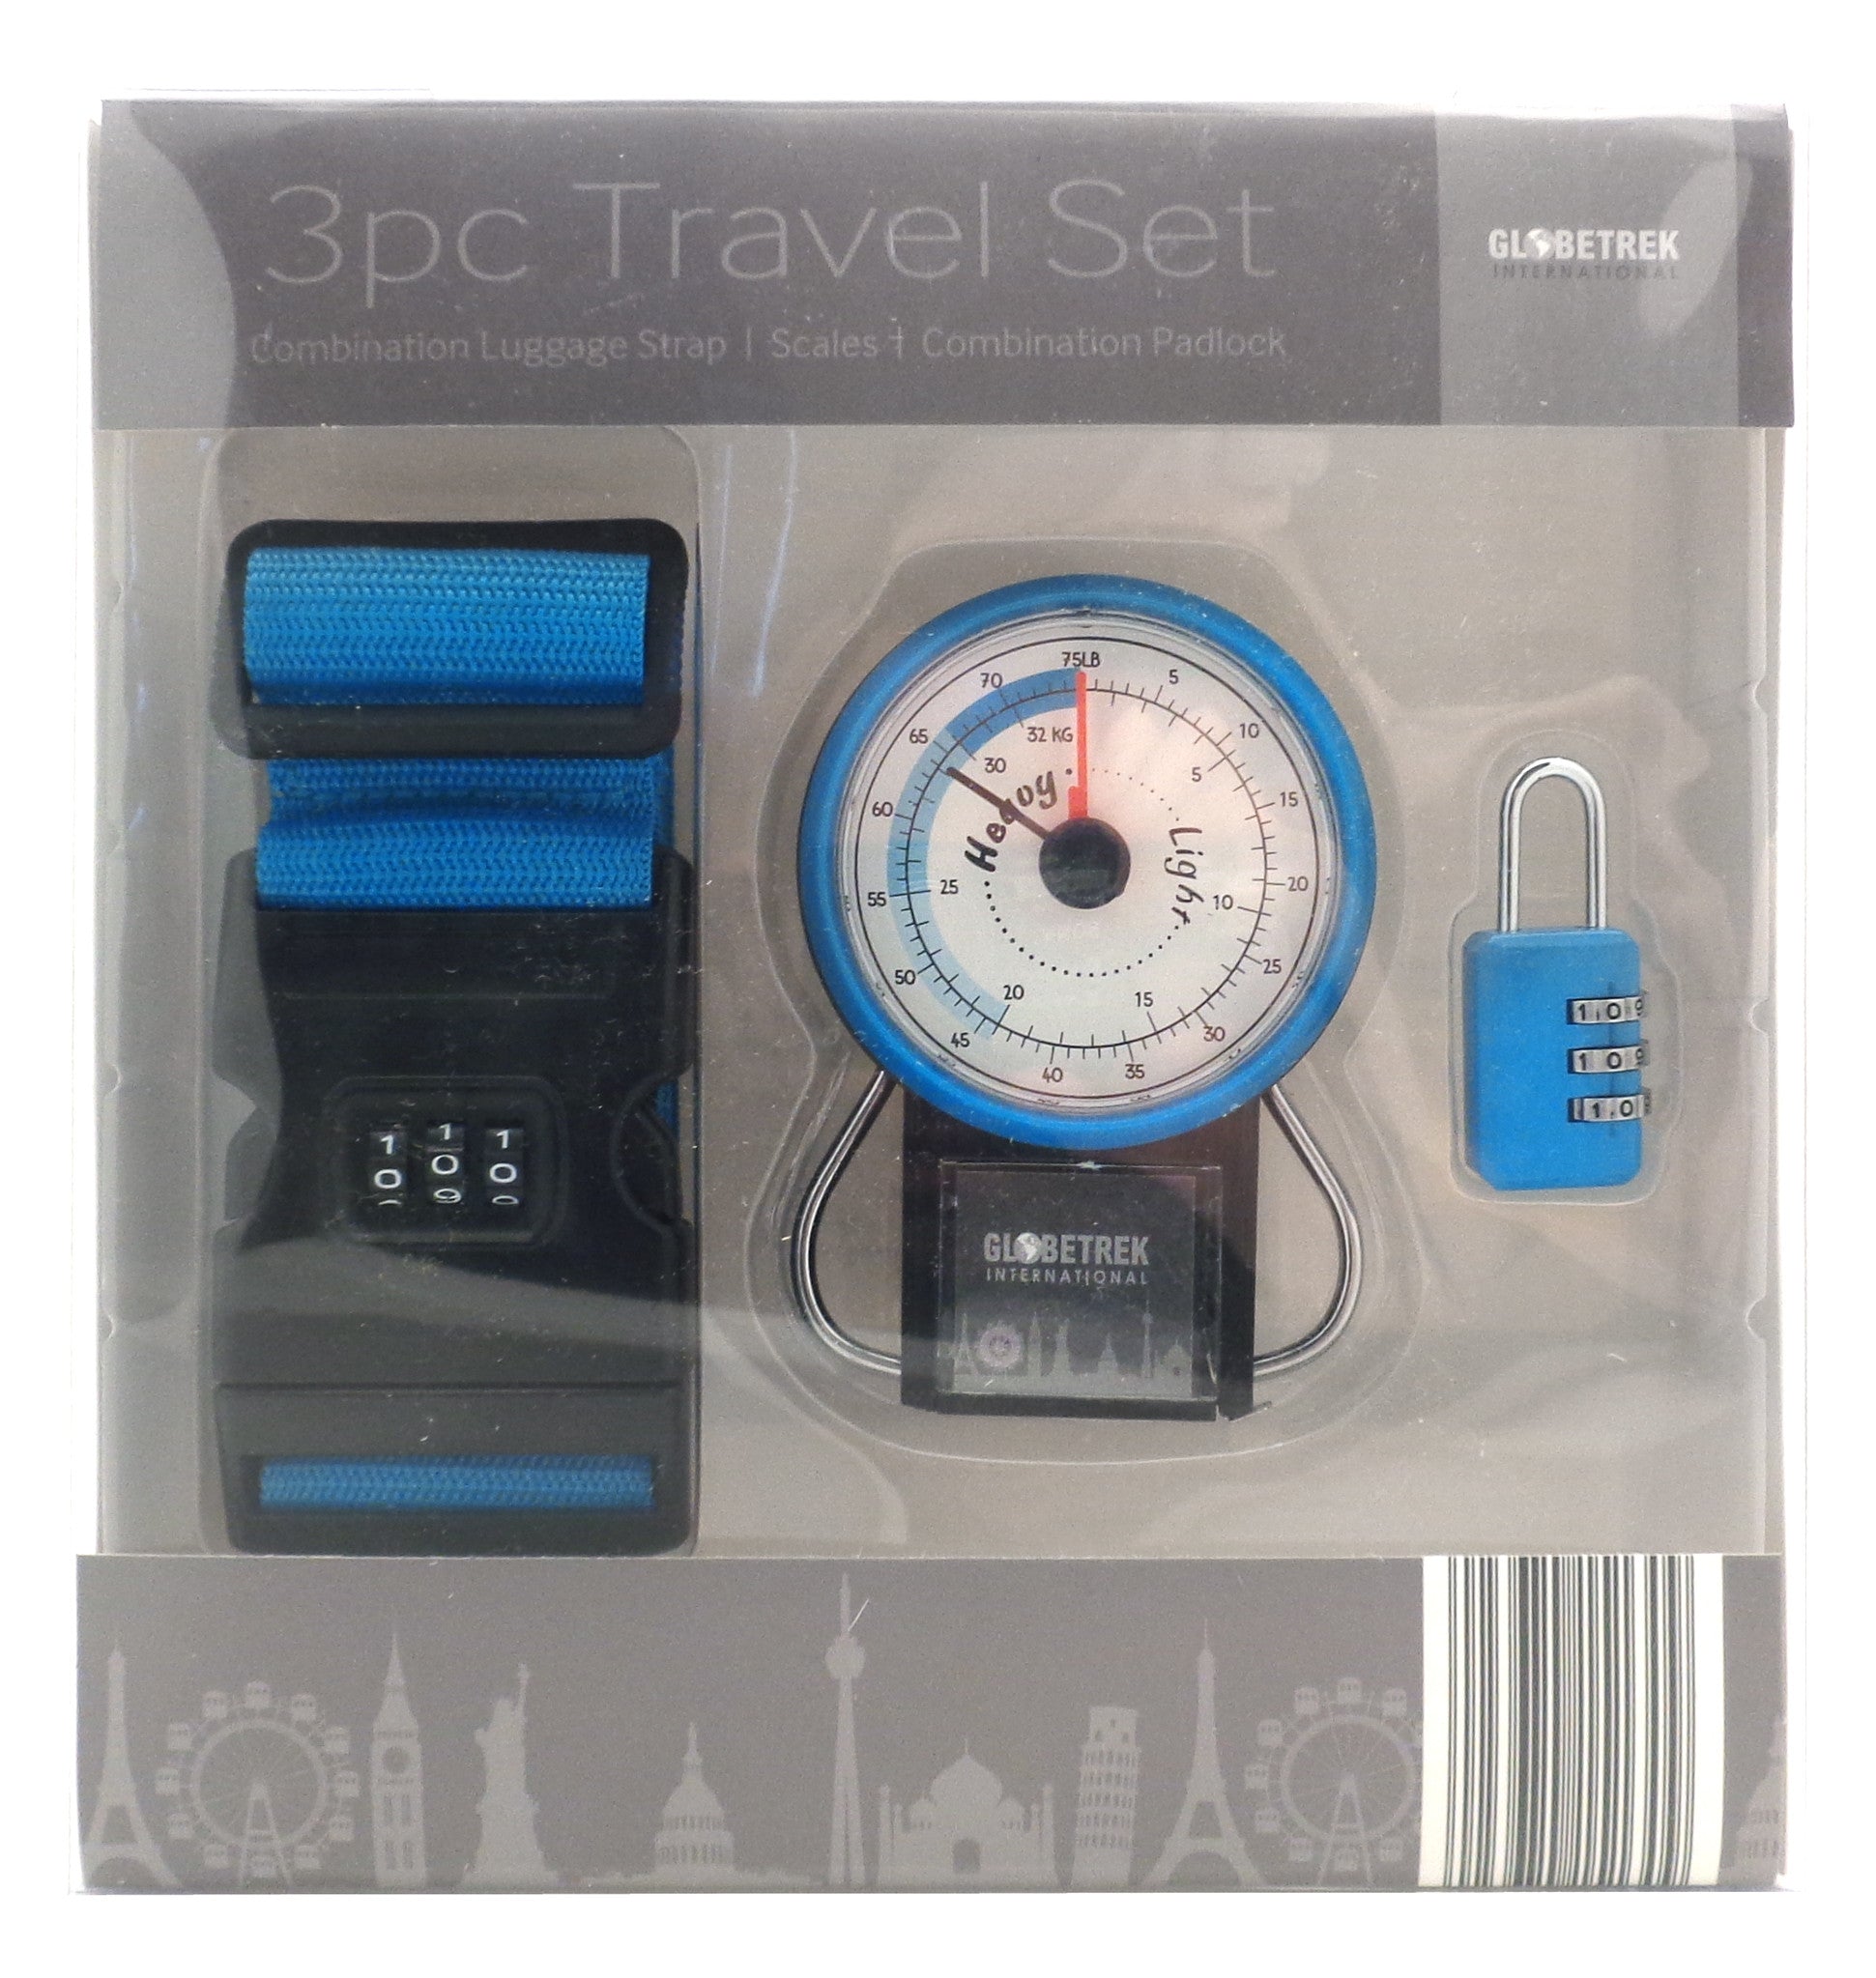 3 Piece Travel Set - Combination Luggage Strap, Scales, Combination Padlock